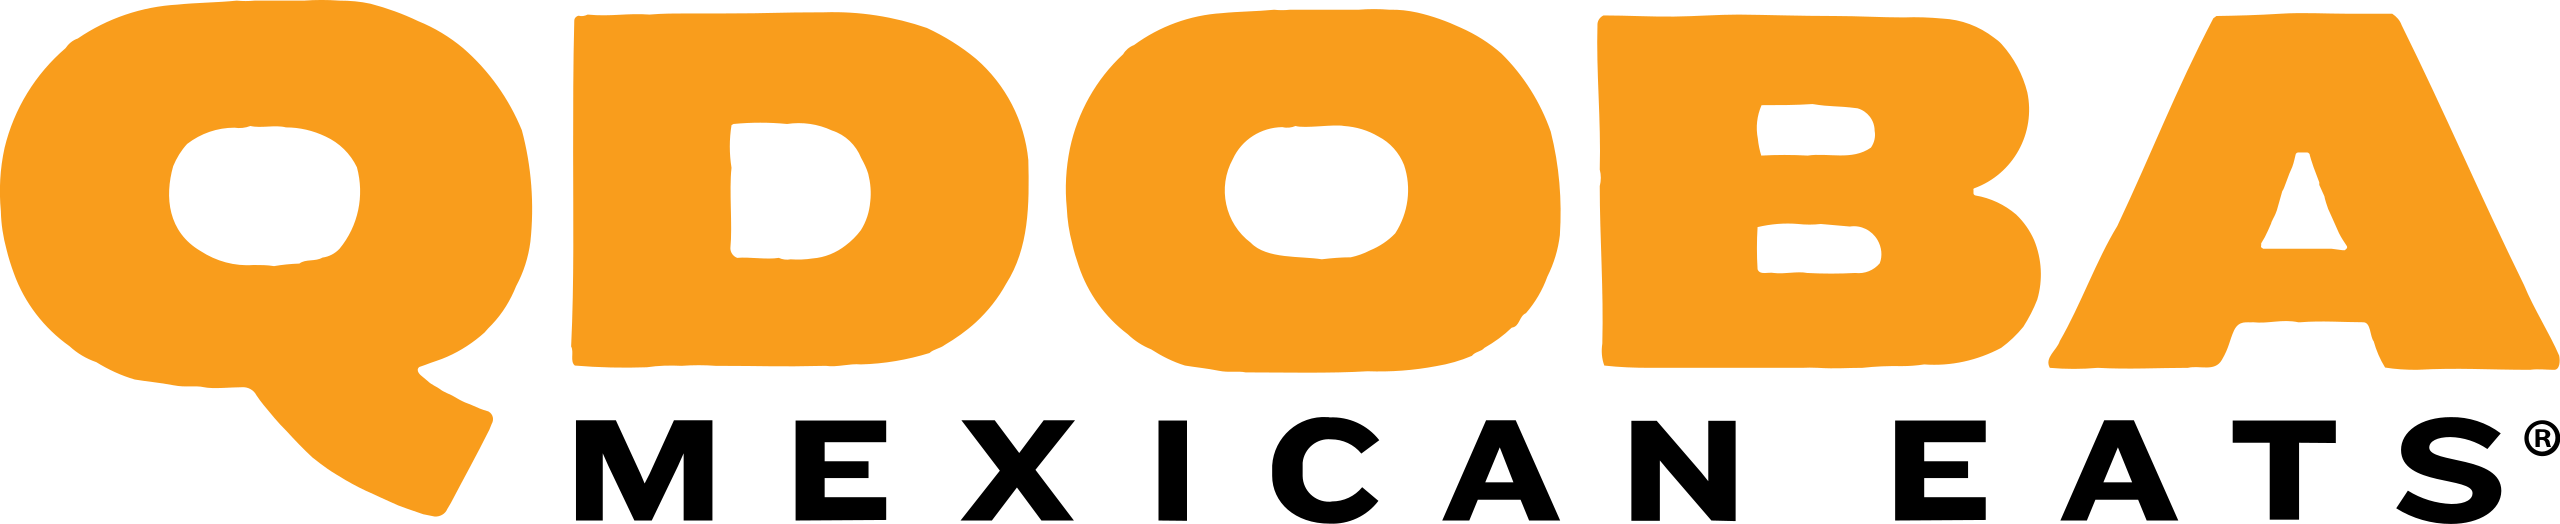 Qdoba's logo